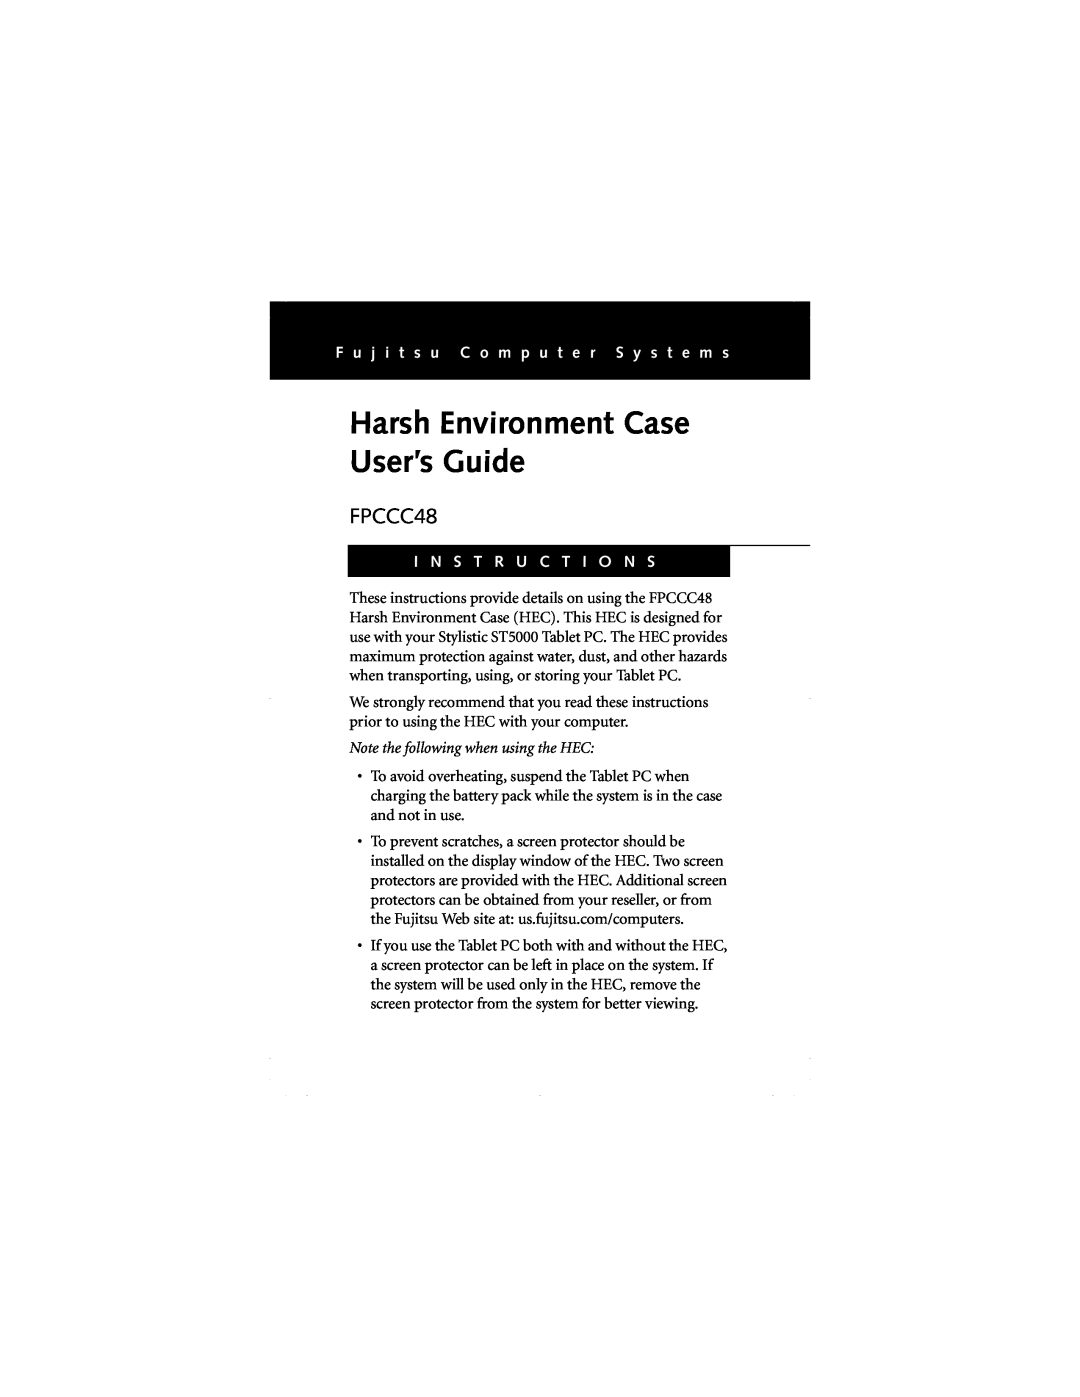 Fujitsu FPCCC48 manual Harsh Environment Case User’s Guide, F u j i t s u C o m p u t e r S y s t e m s 